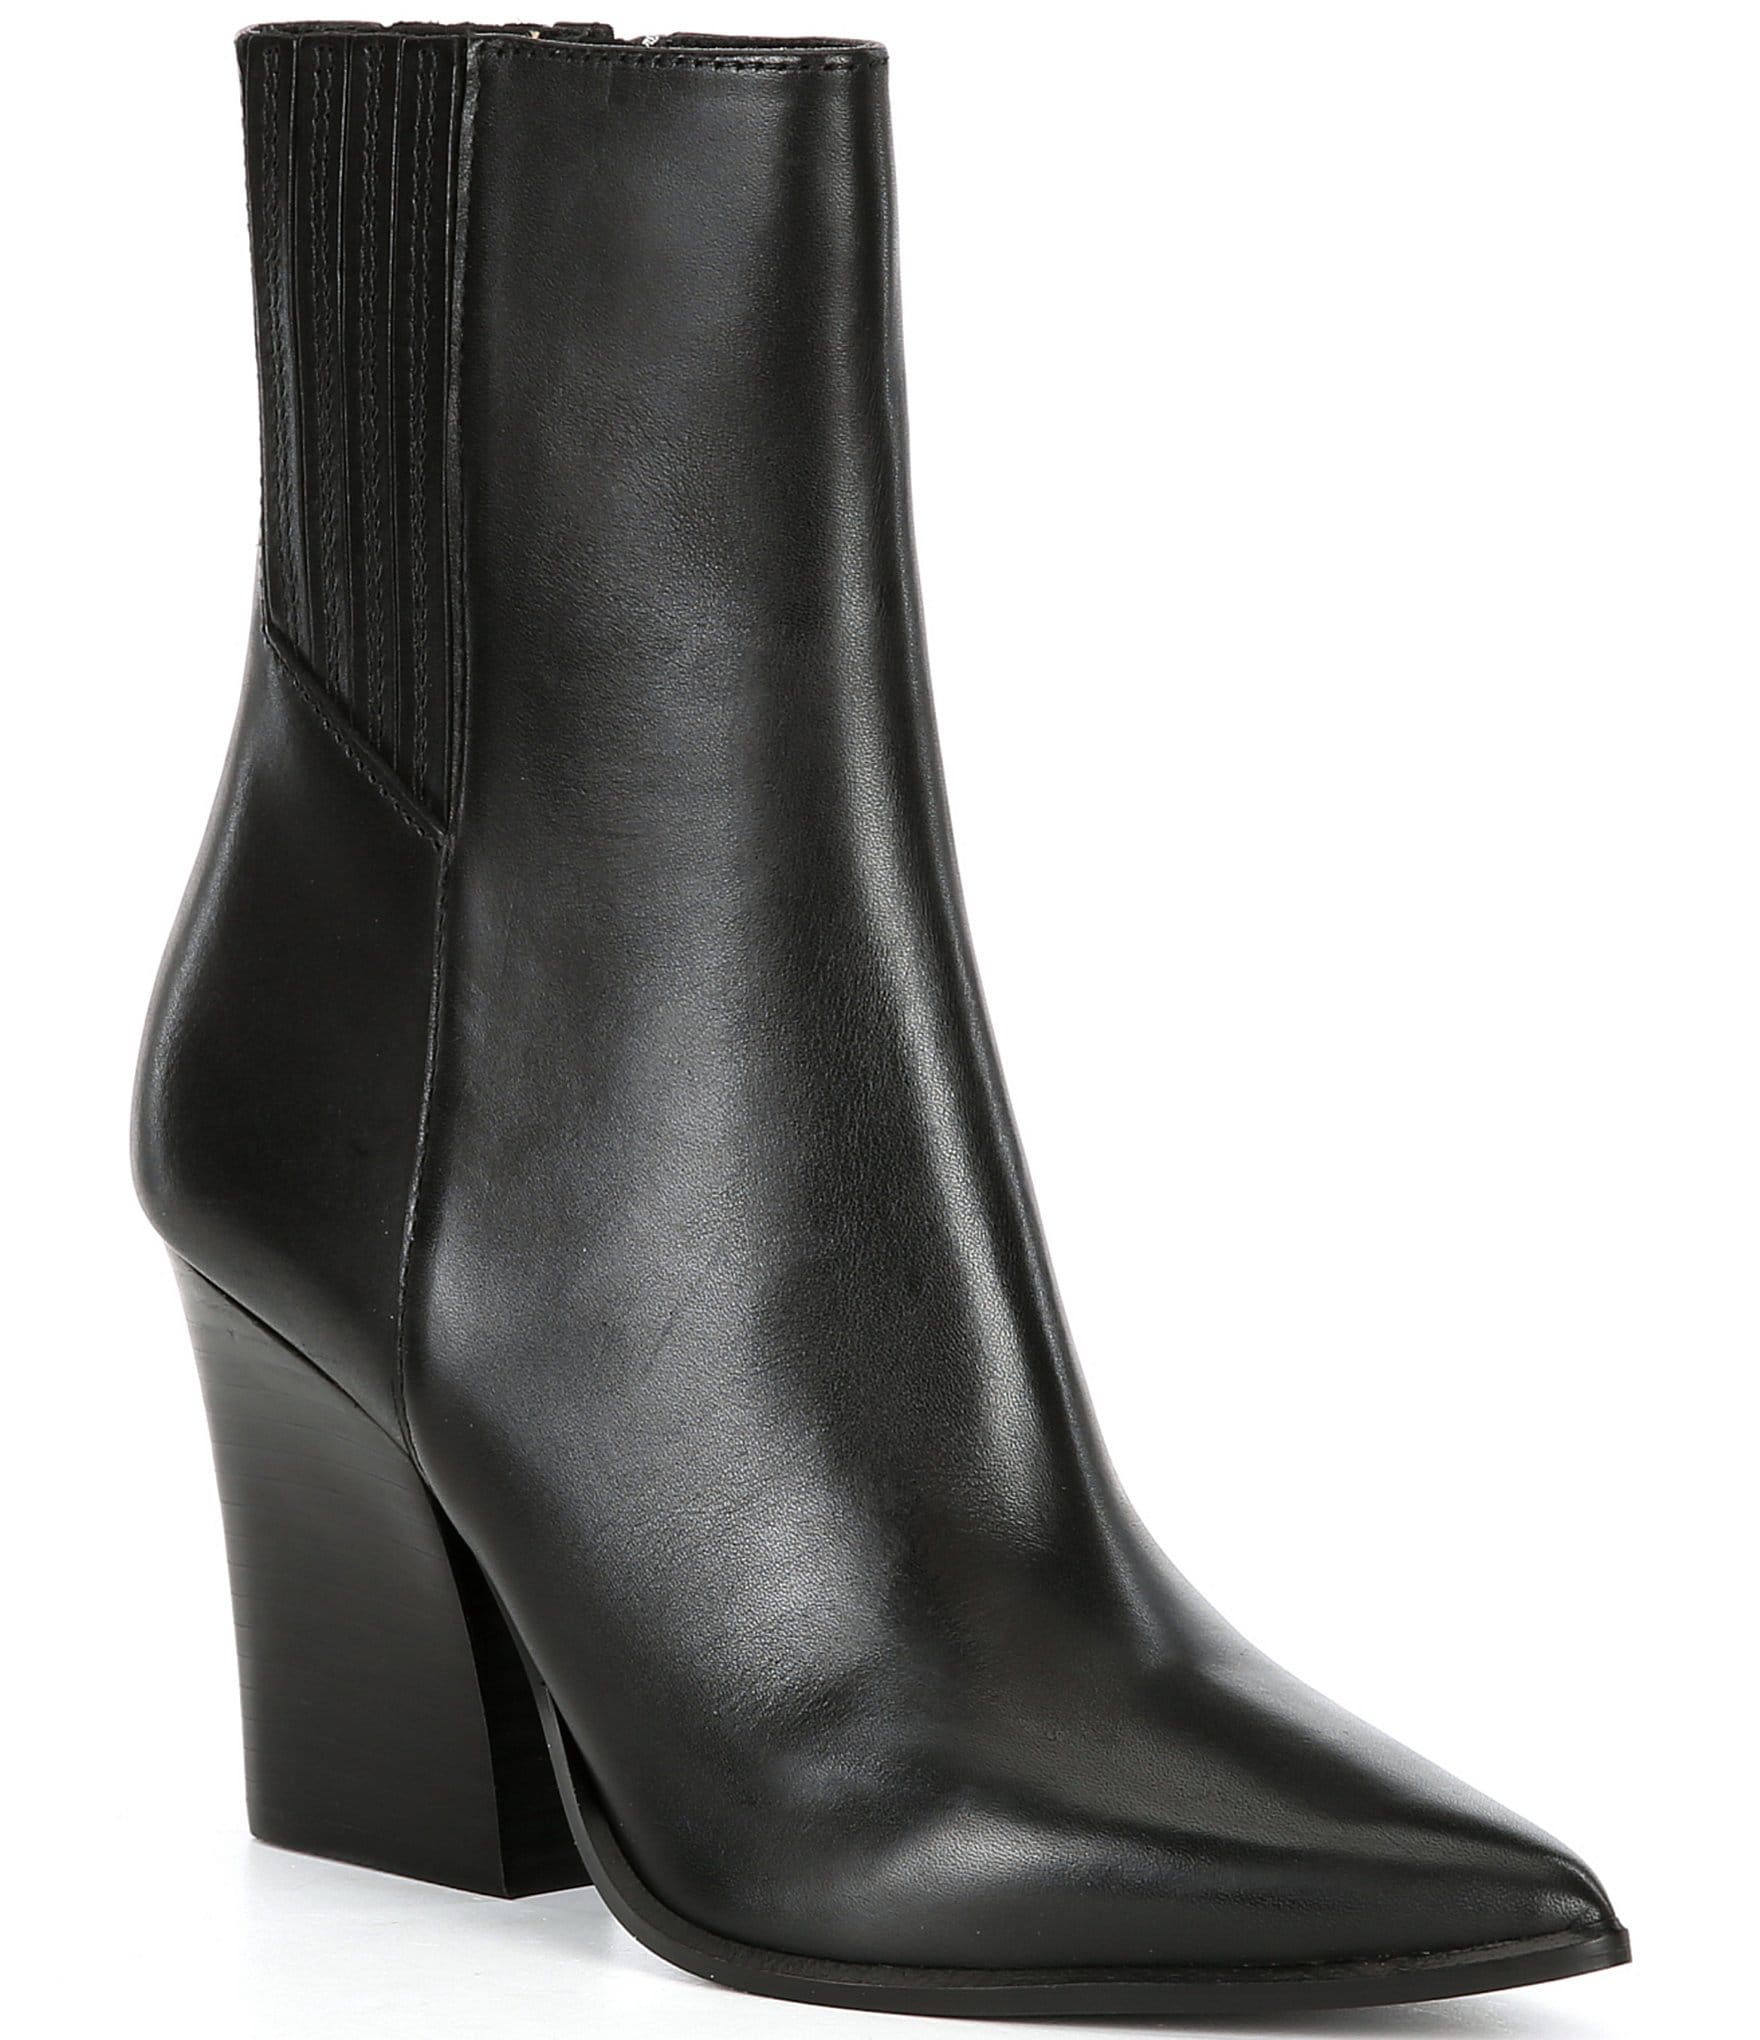 High ankle zipper boot – Richkid